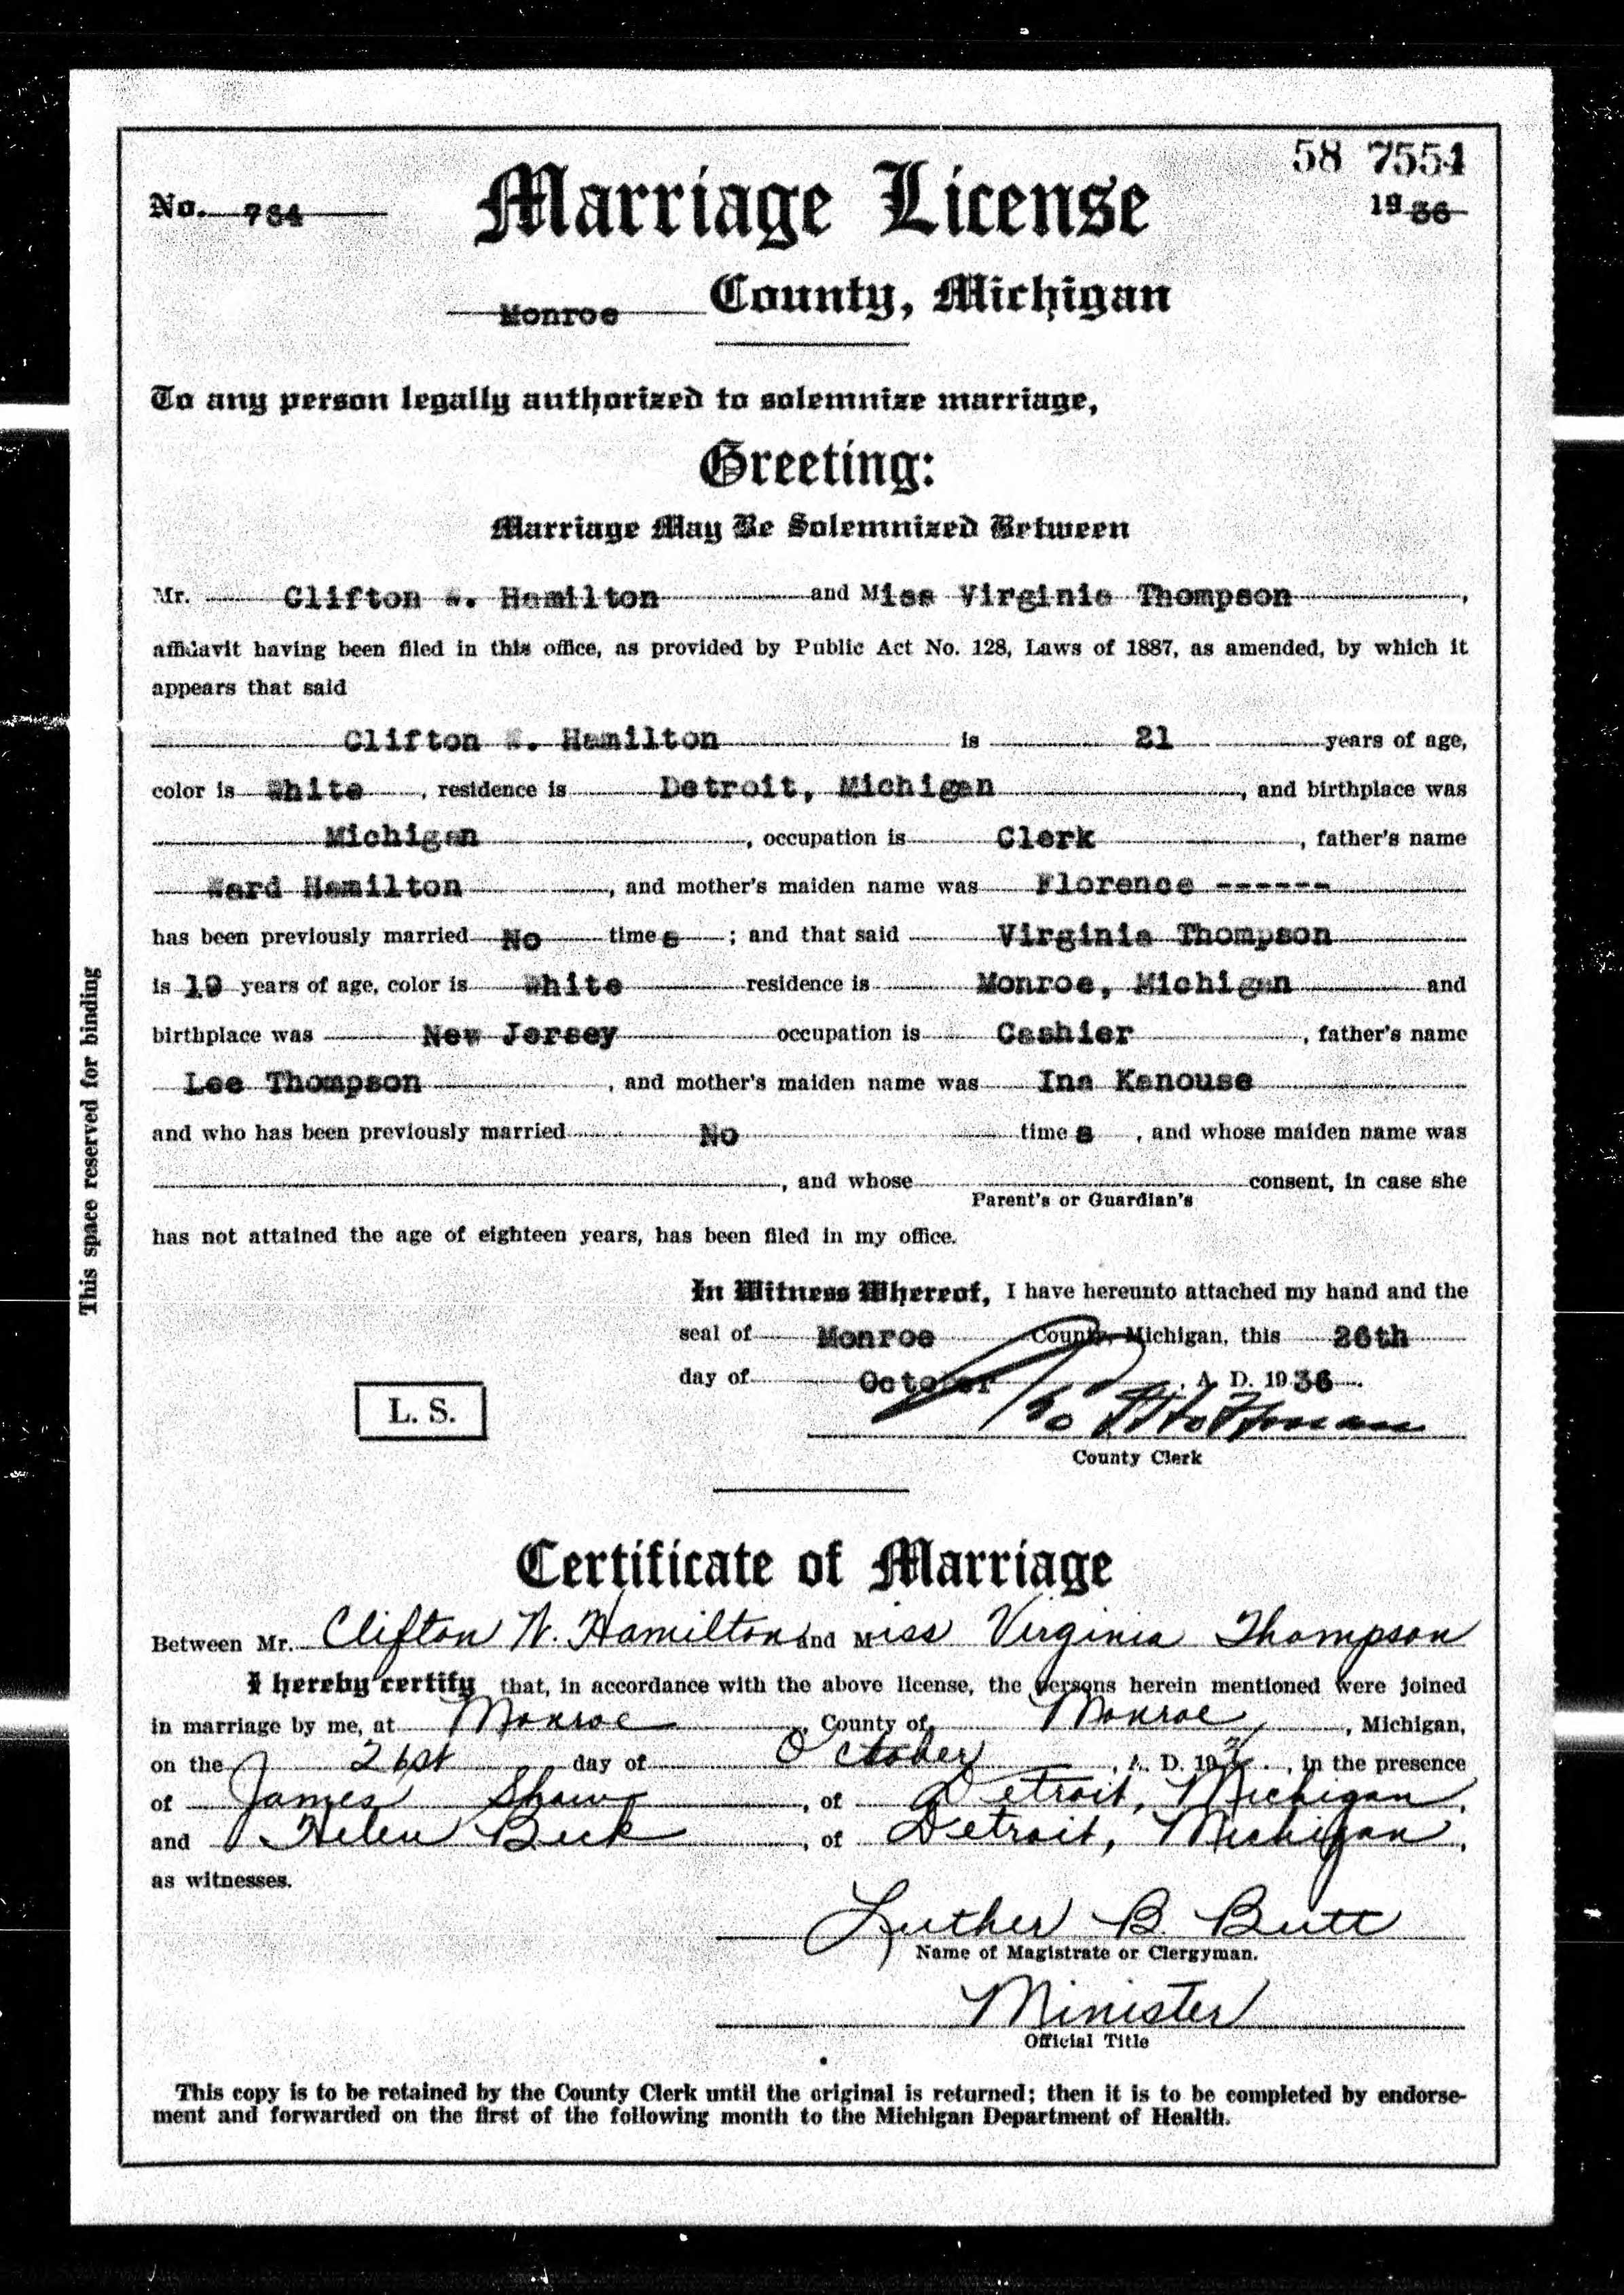 Clifton Hamilton married Virgina Thompson. With The Shaw family 